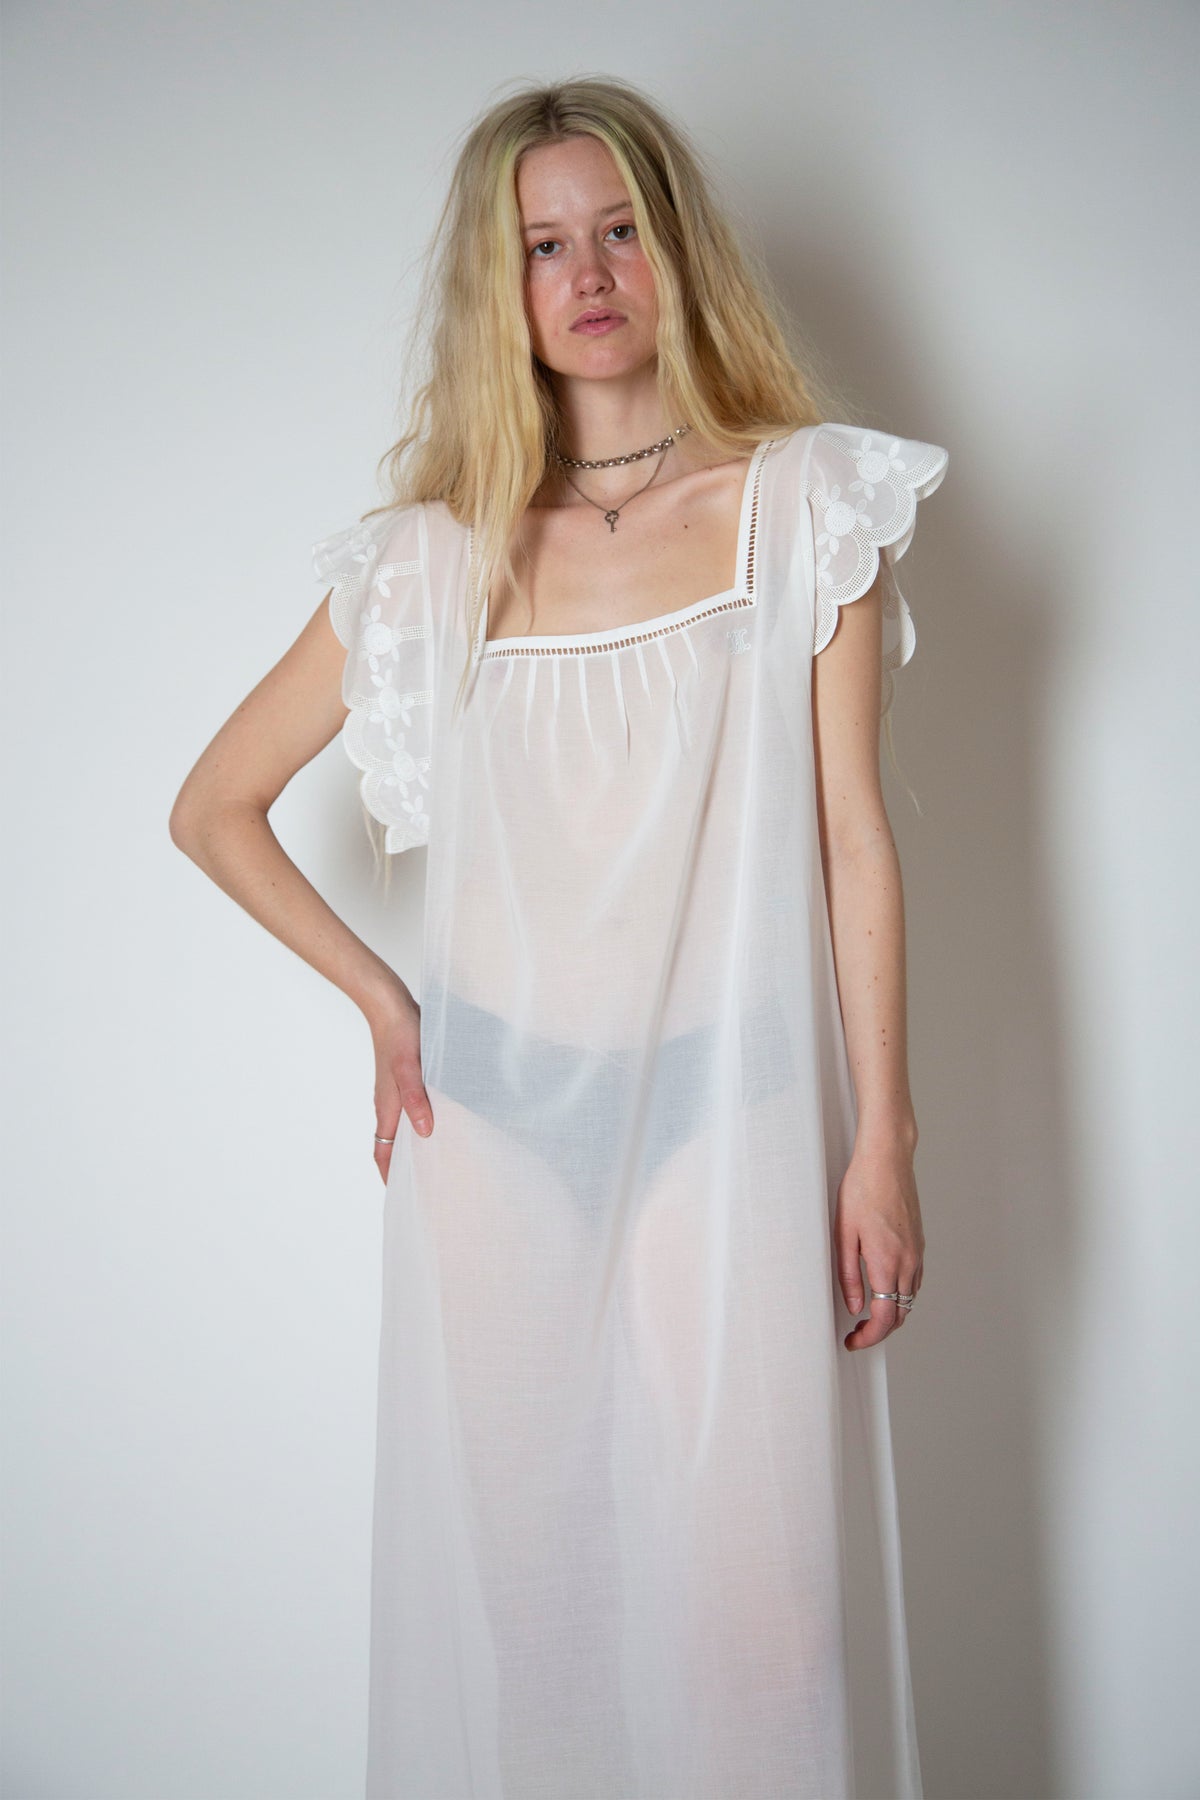 Celine nightgown